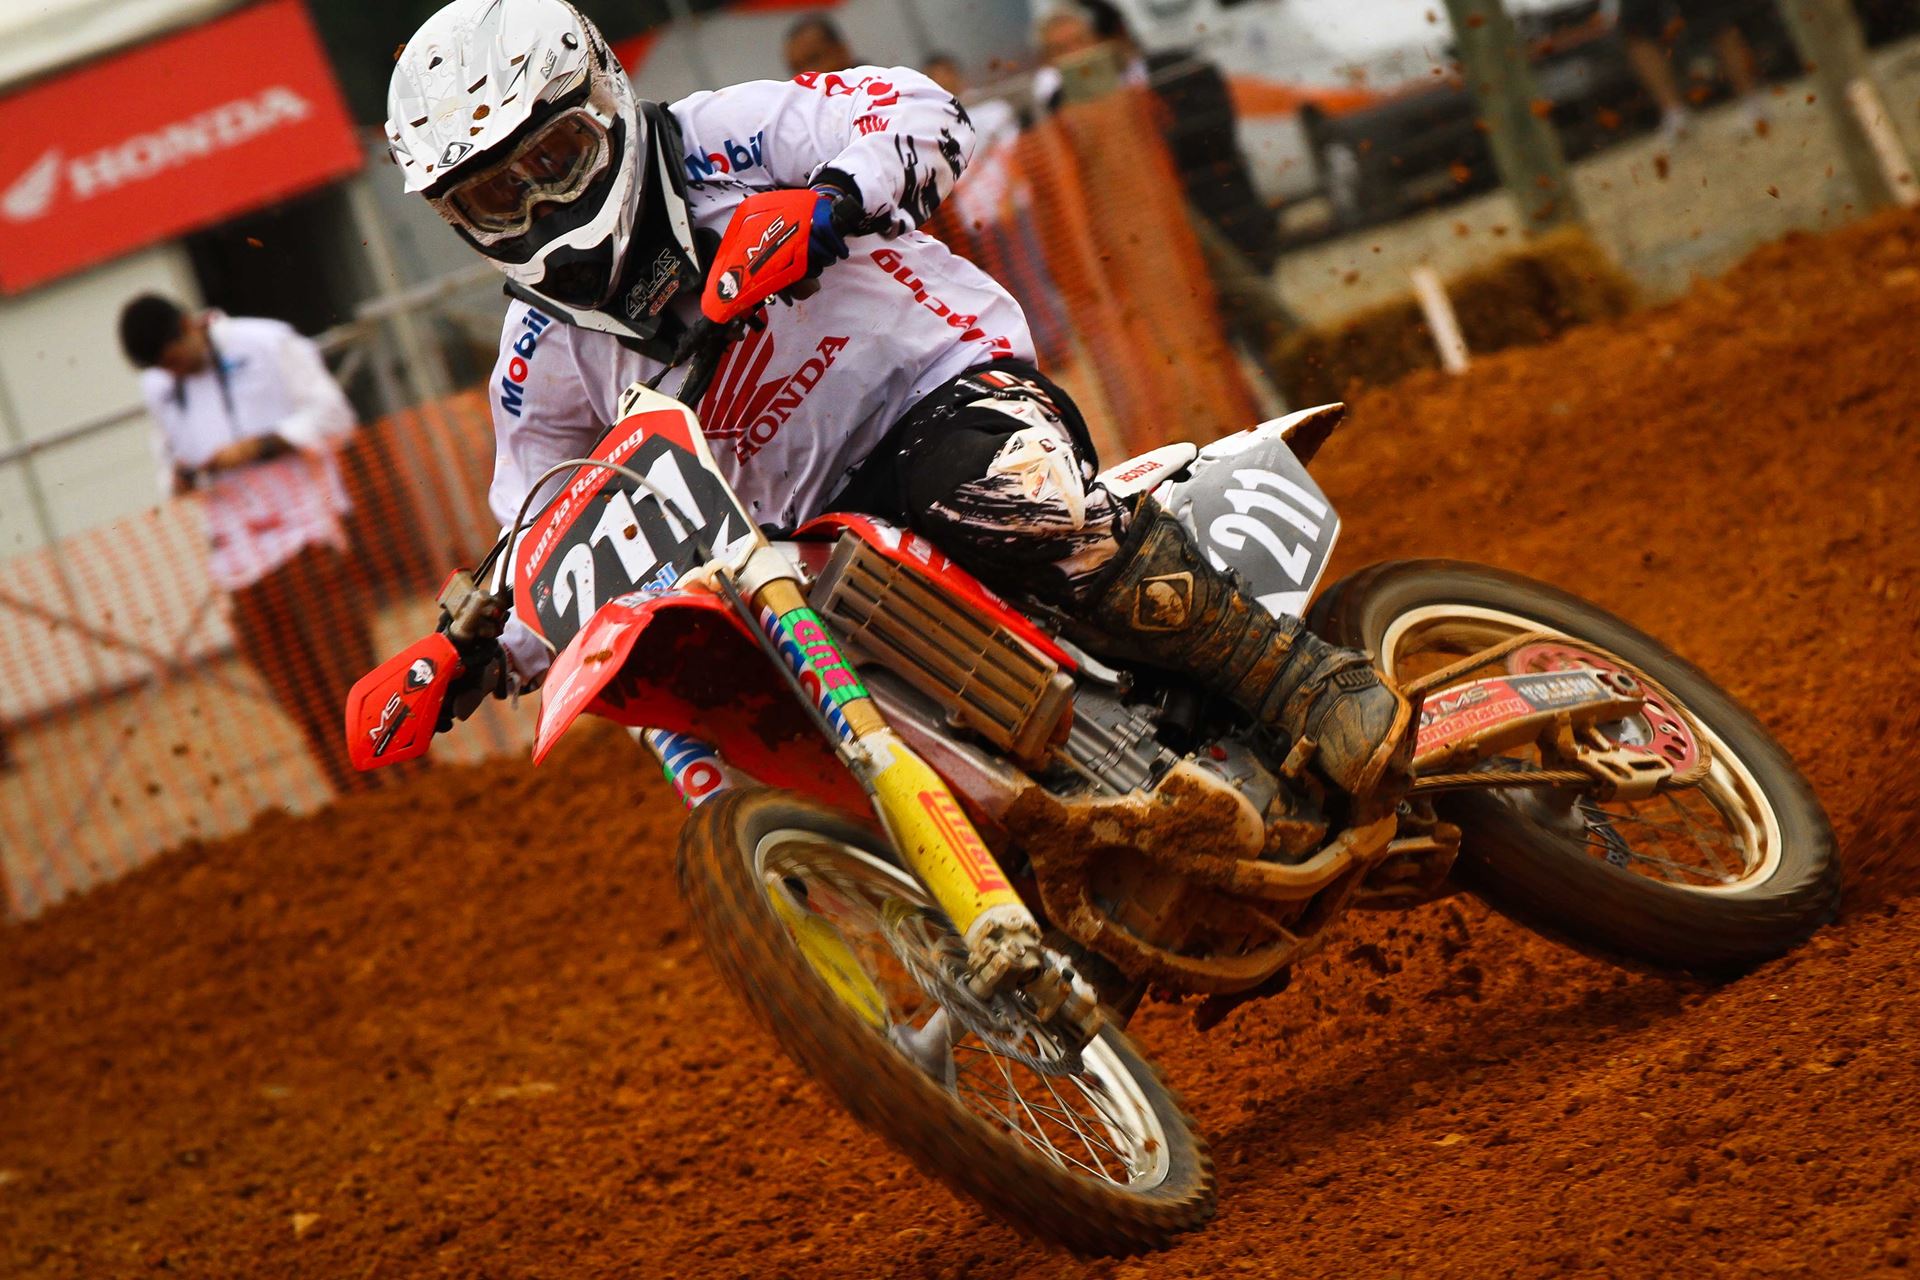 Honda Racing pronta para as corridas no MS pelo Brasileiro de Motocross –  Mundo Press